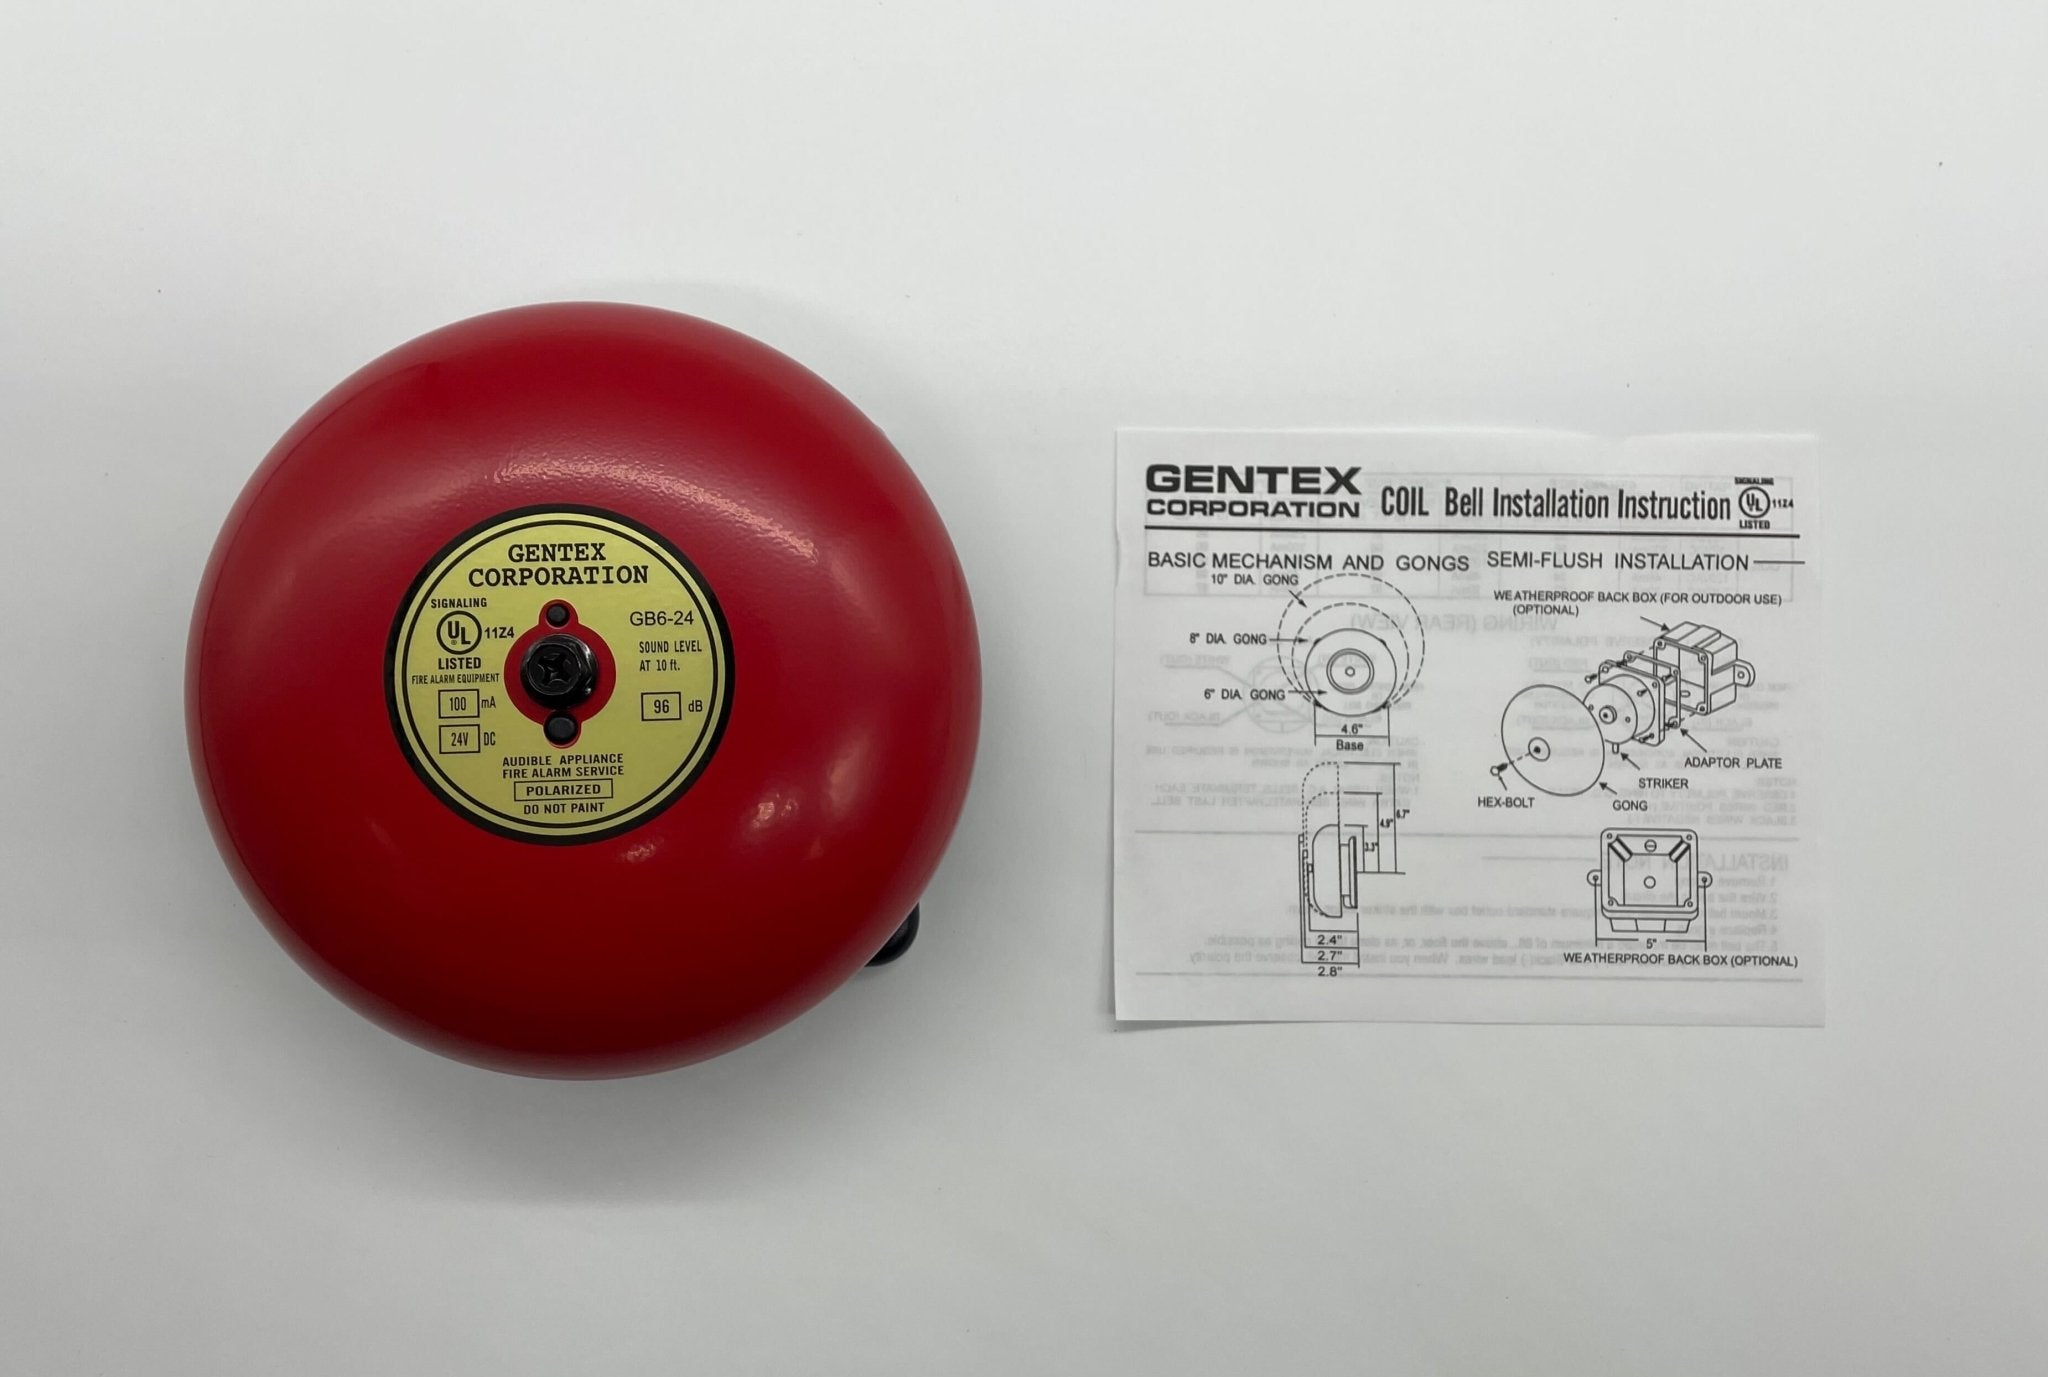 Gentex GB6-24 - The Fire Alarm Supplier